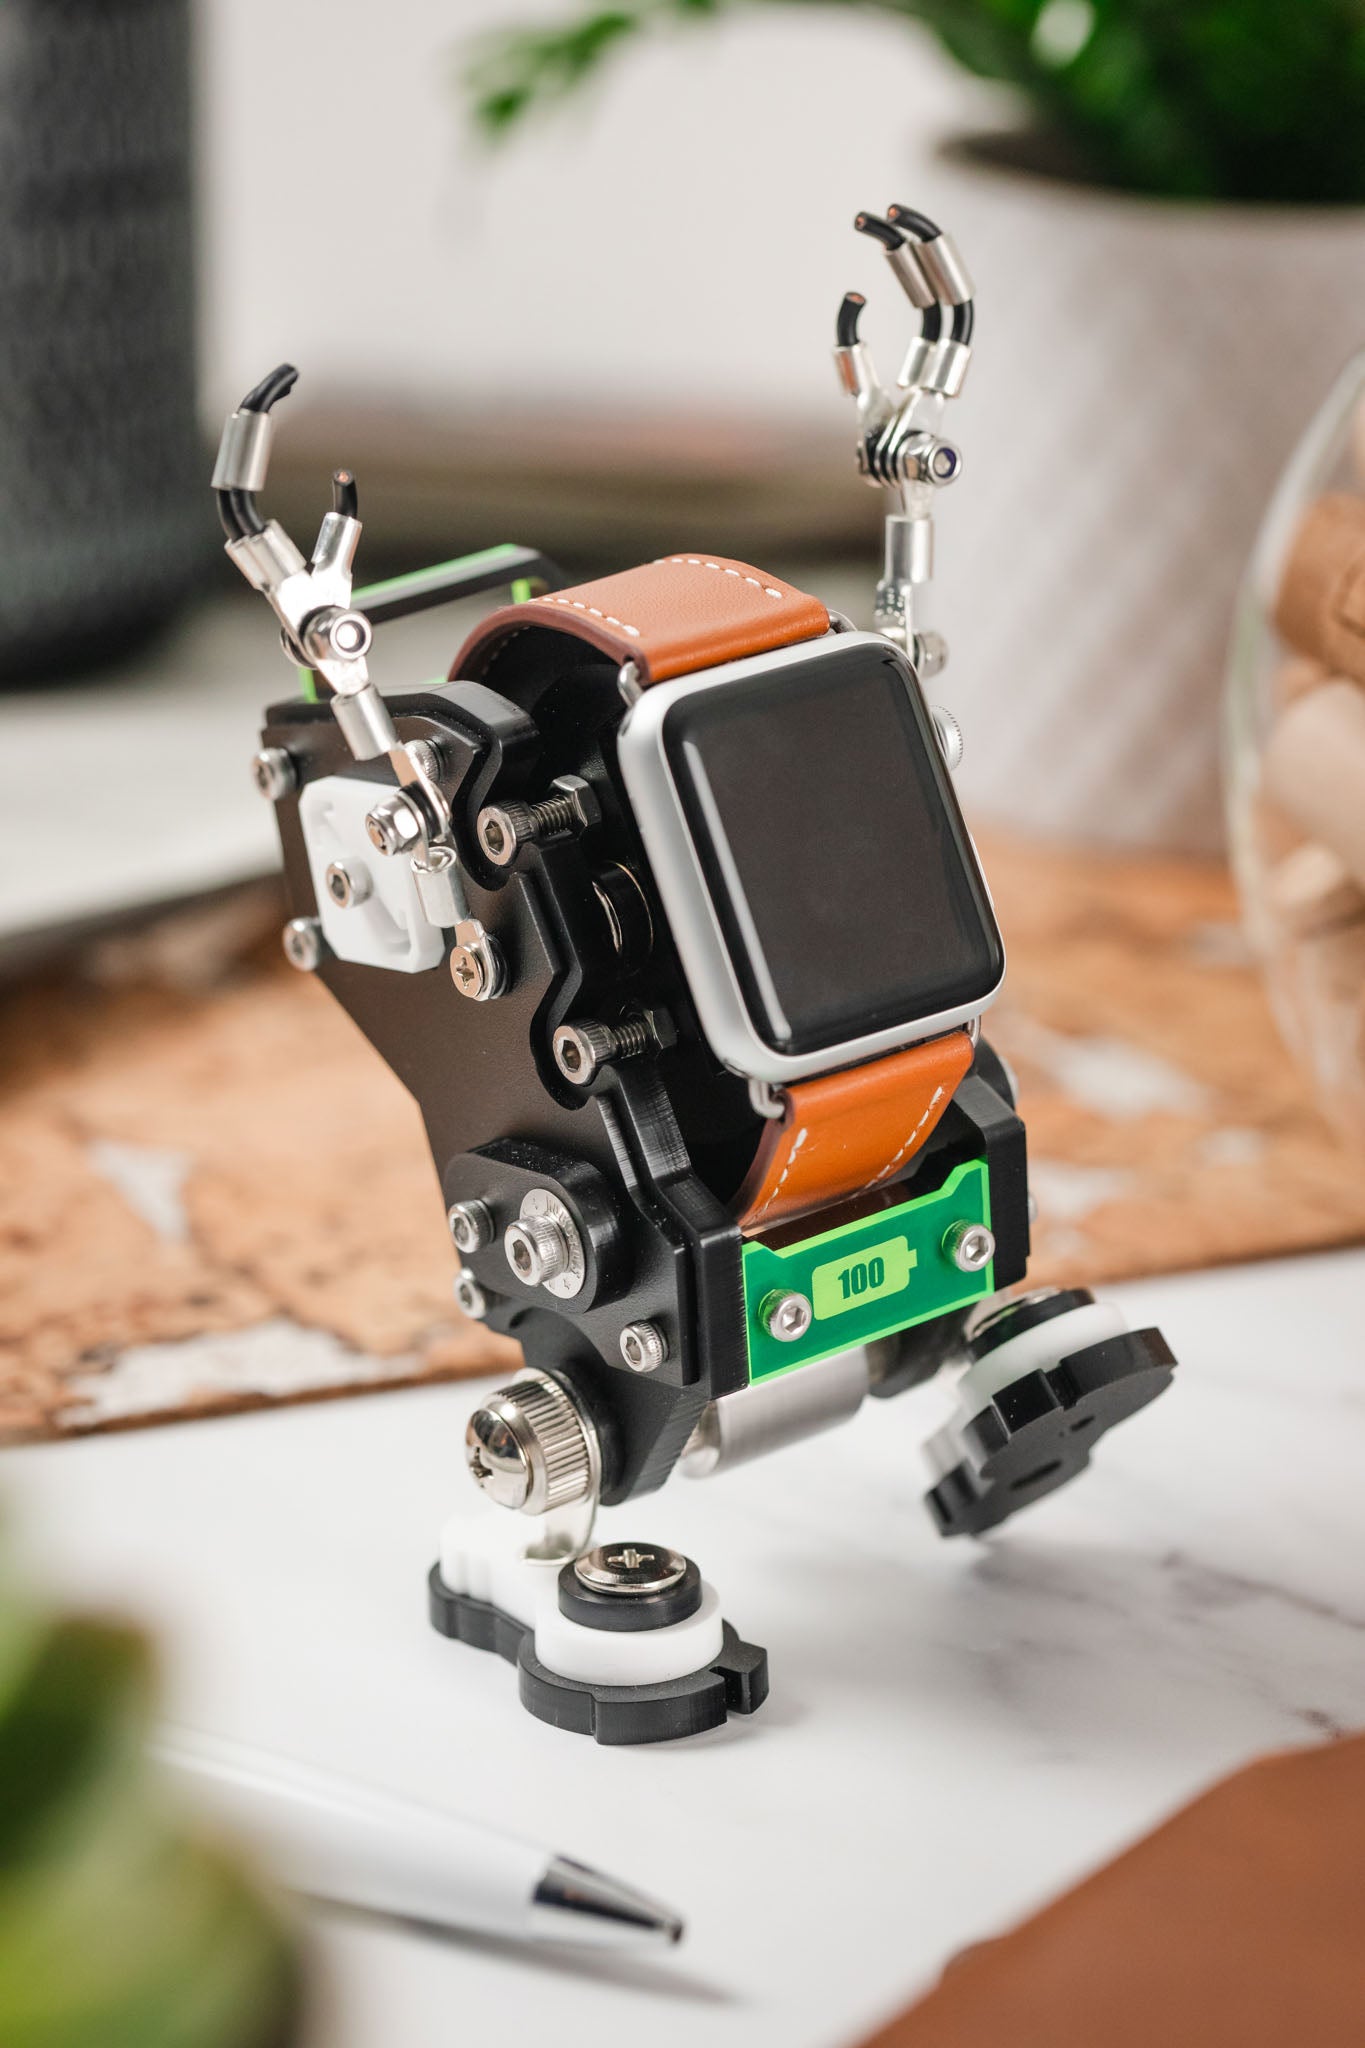 ROBOTOYS - DAVE - Black Watch holder